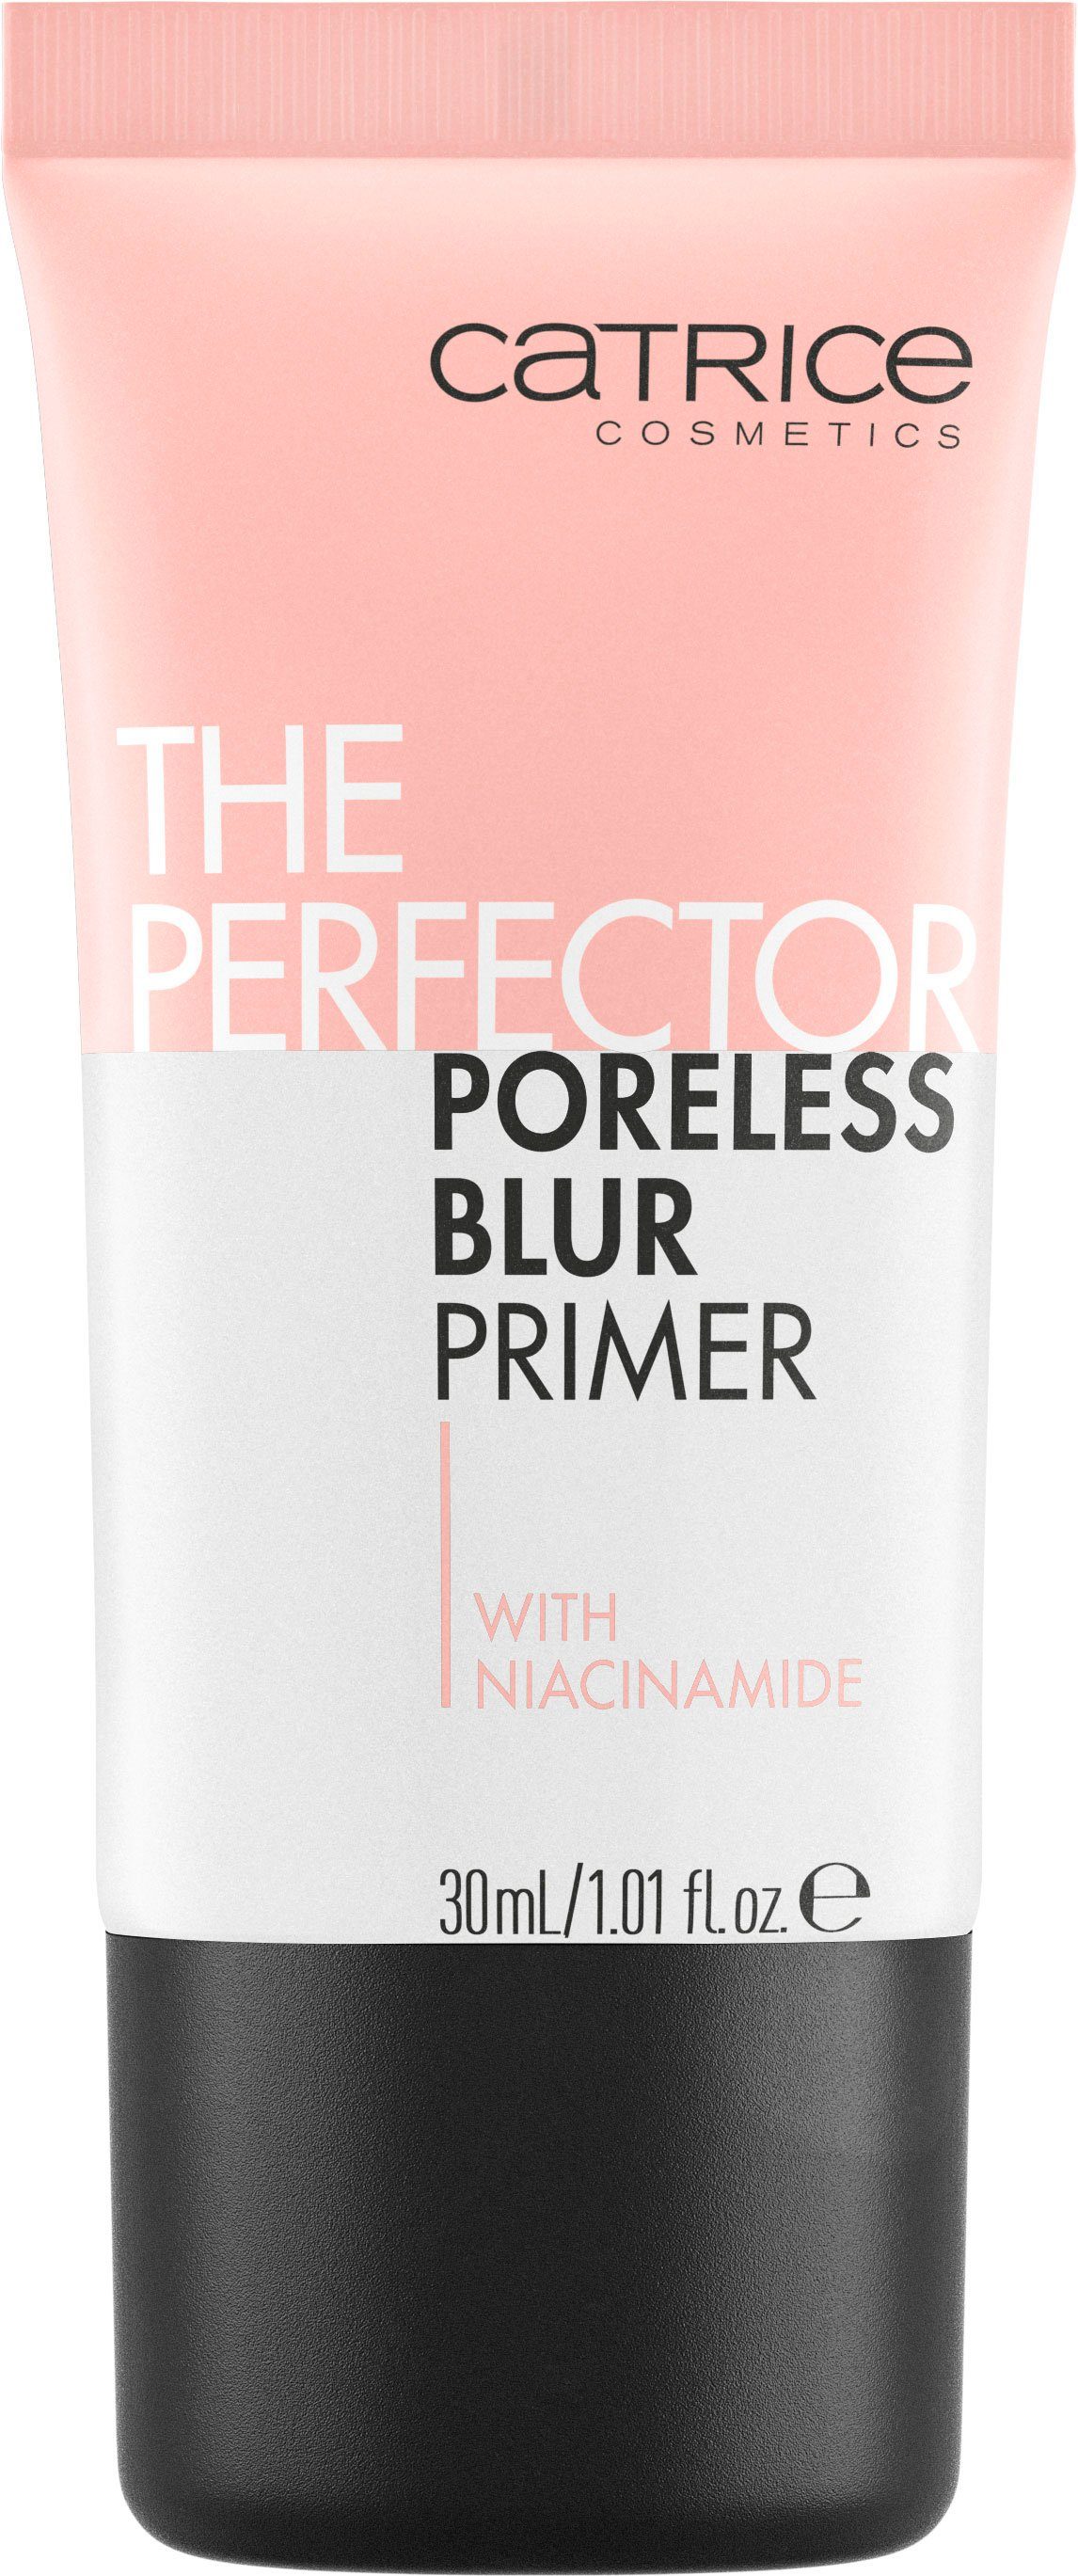 The Blur 3-tlg. Perfector Poreless Catrice Primer, Primer